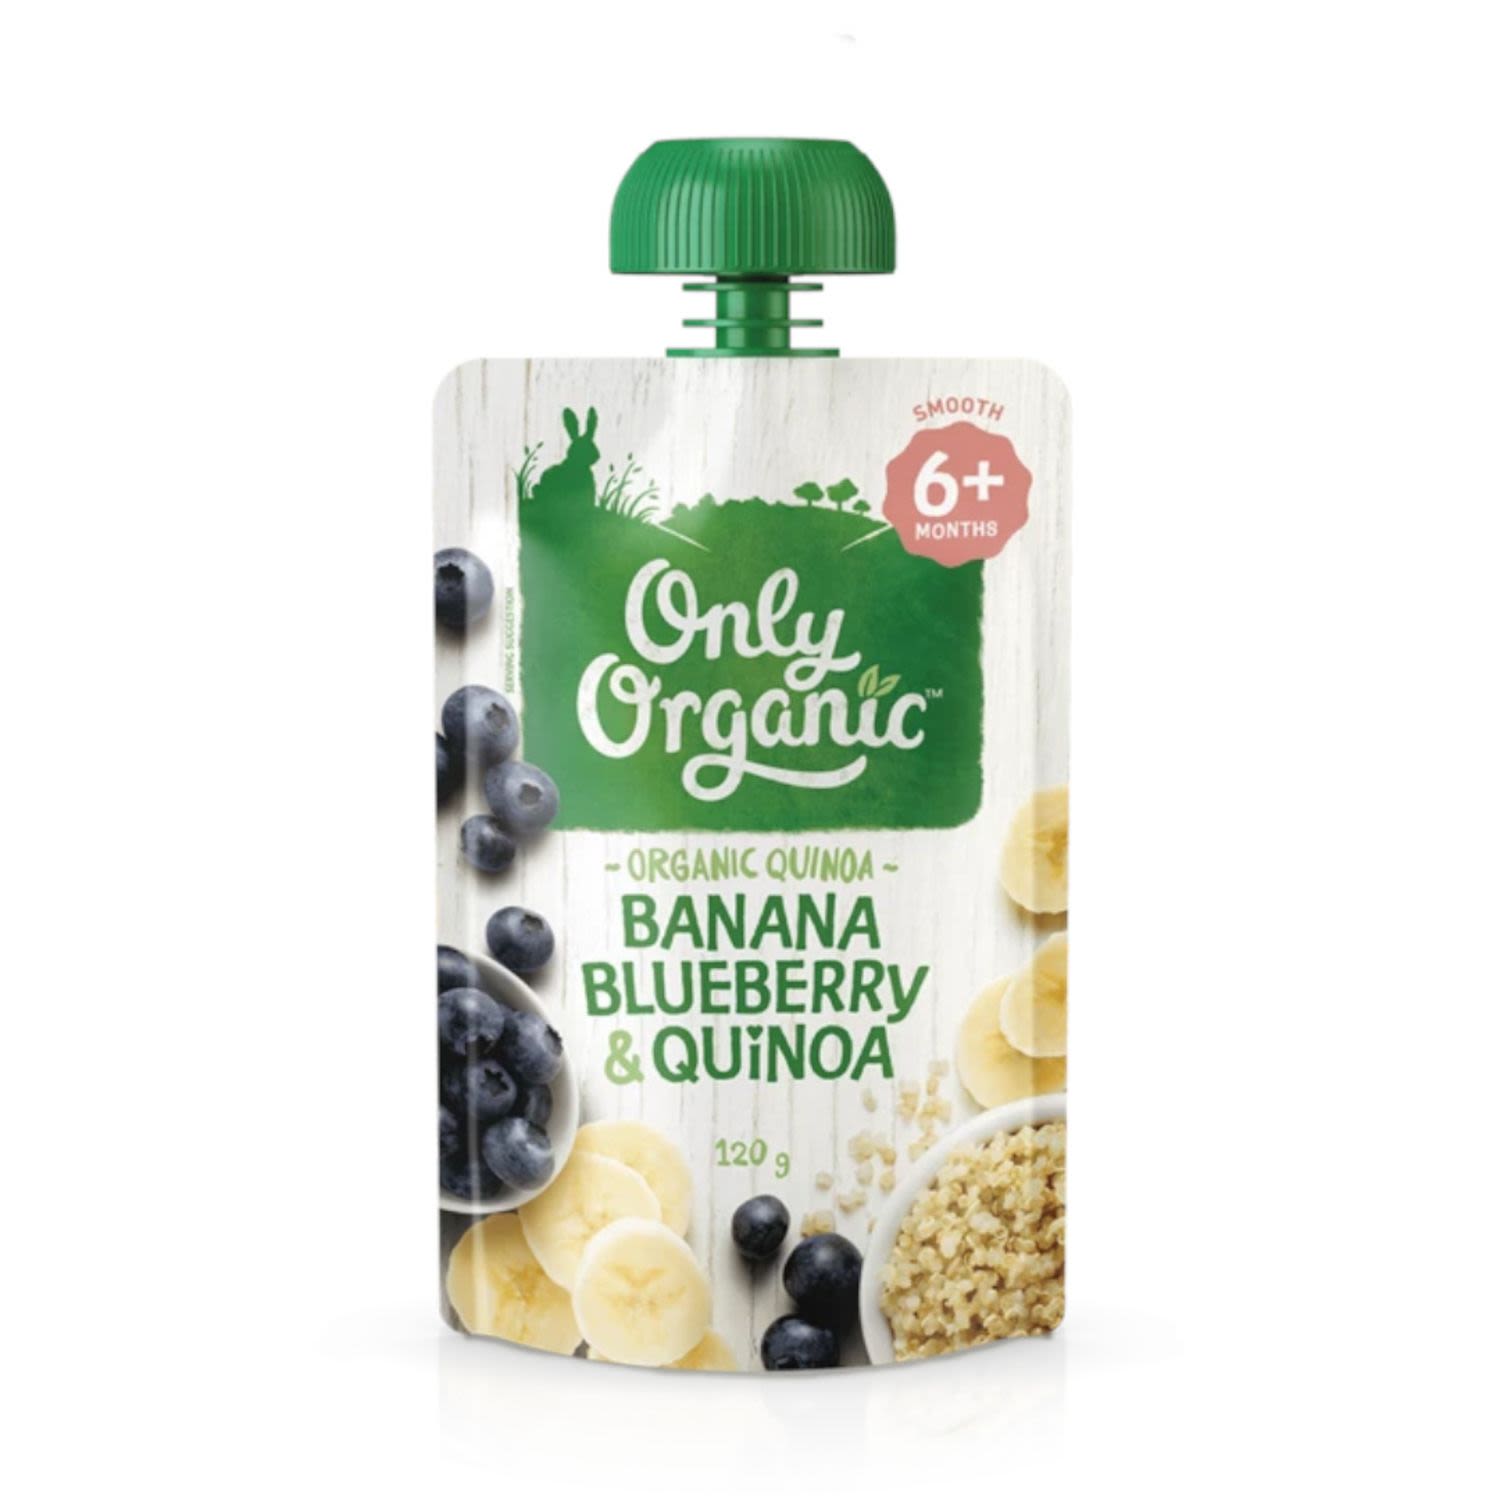 Only Organic Banana Berry & Quinoa, 120 Gram